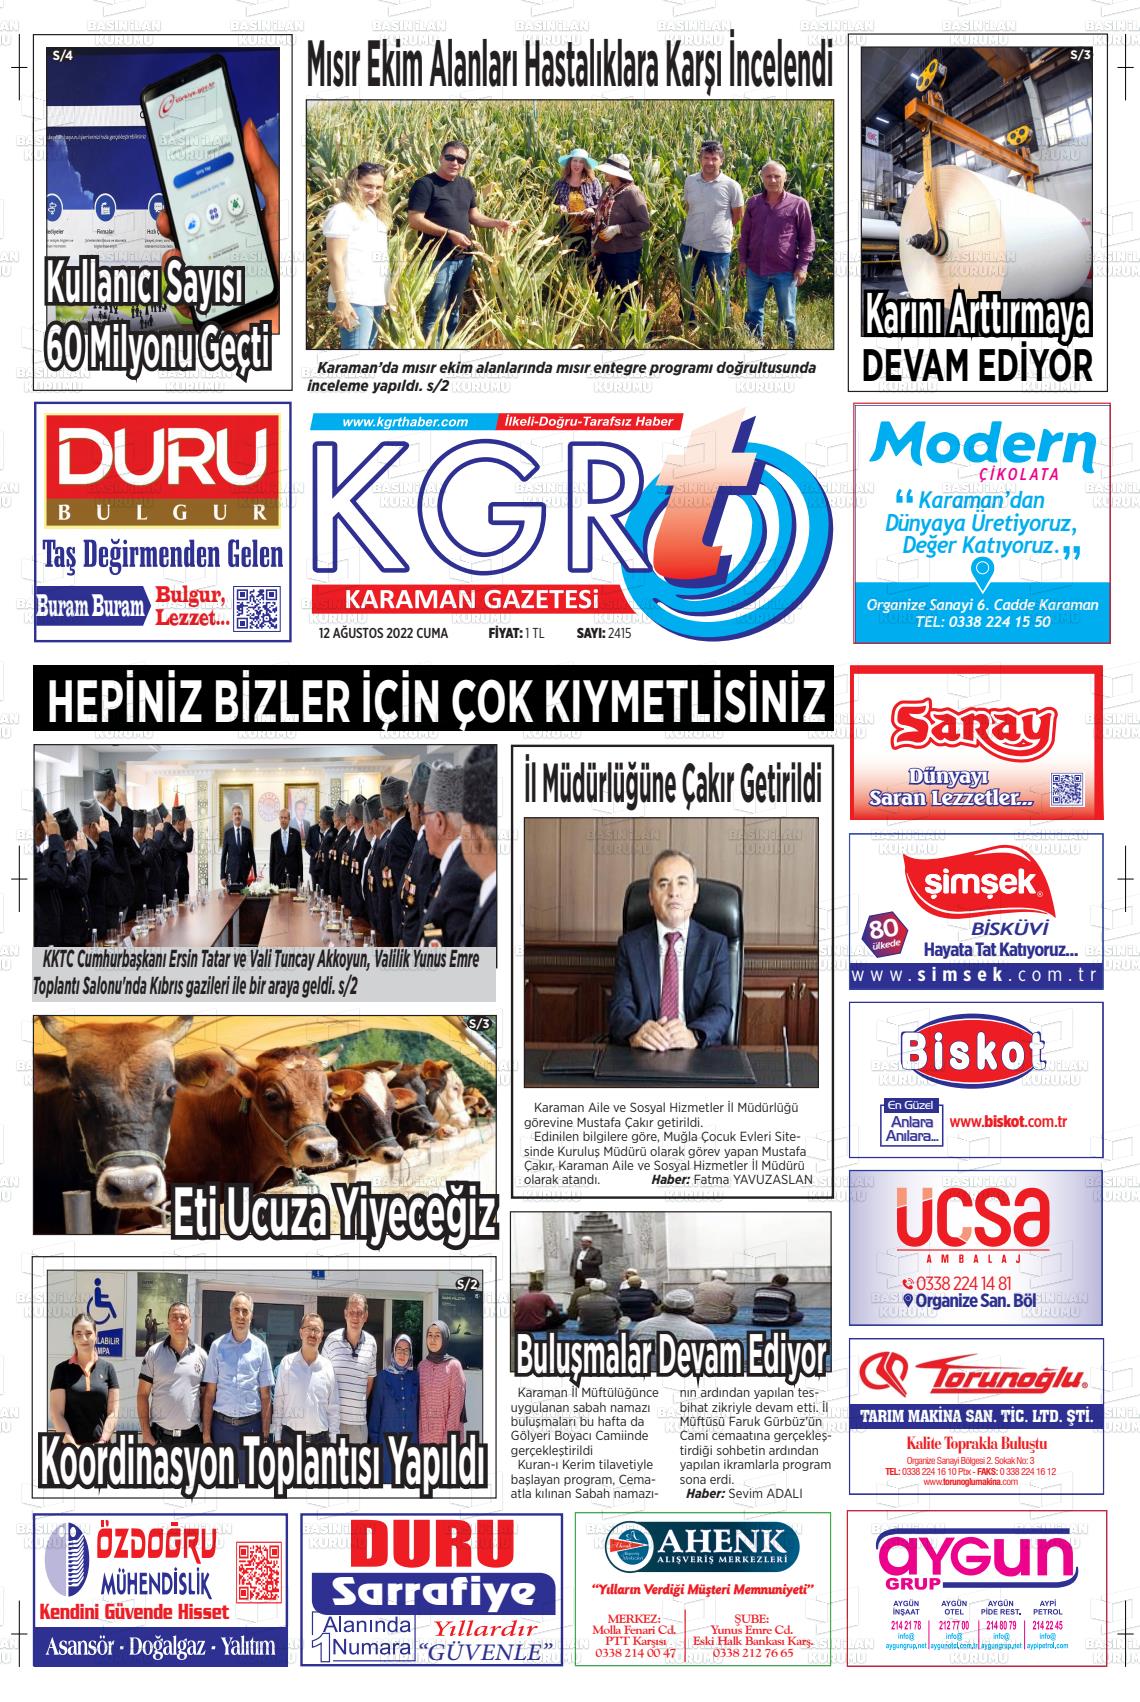 12 Ağustos 2022 Kgrt Karaman Gazete Manşeti